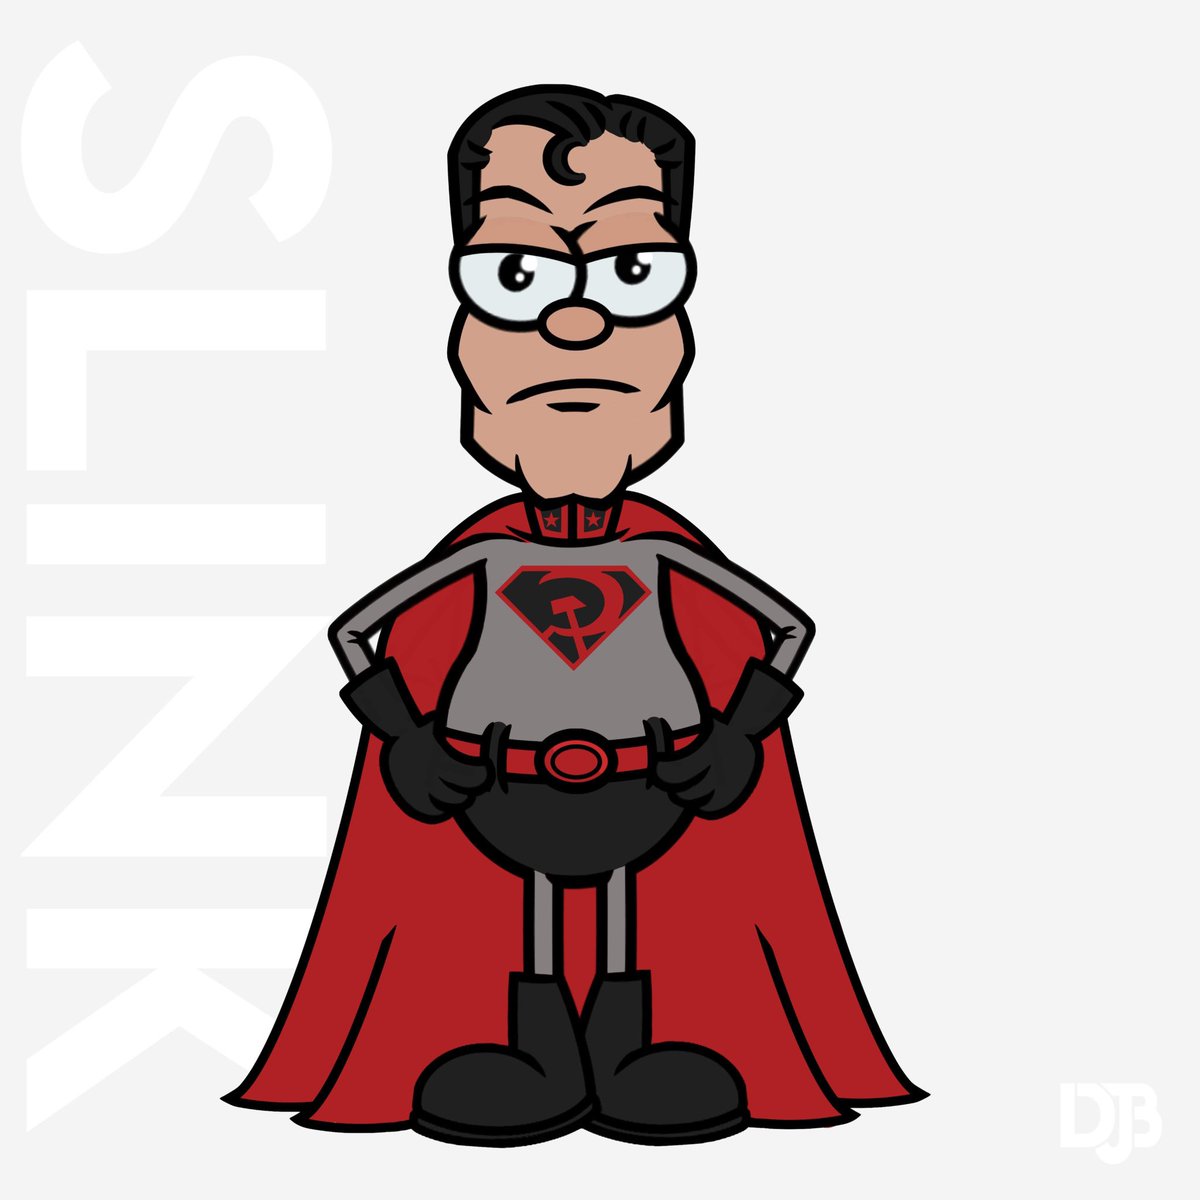 Red Son got SLINKd #superman #redson #dccomics #superheroes #slink #slinkd #djbu #artistofinstagram #artwork #artist #characterdesign